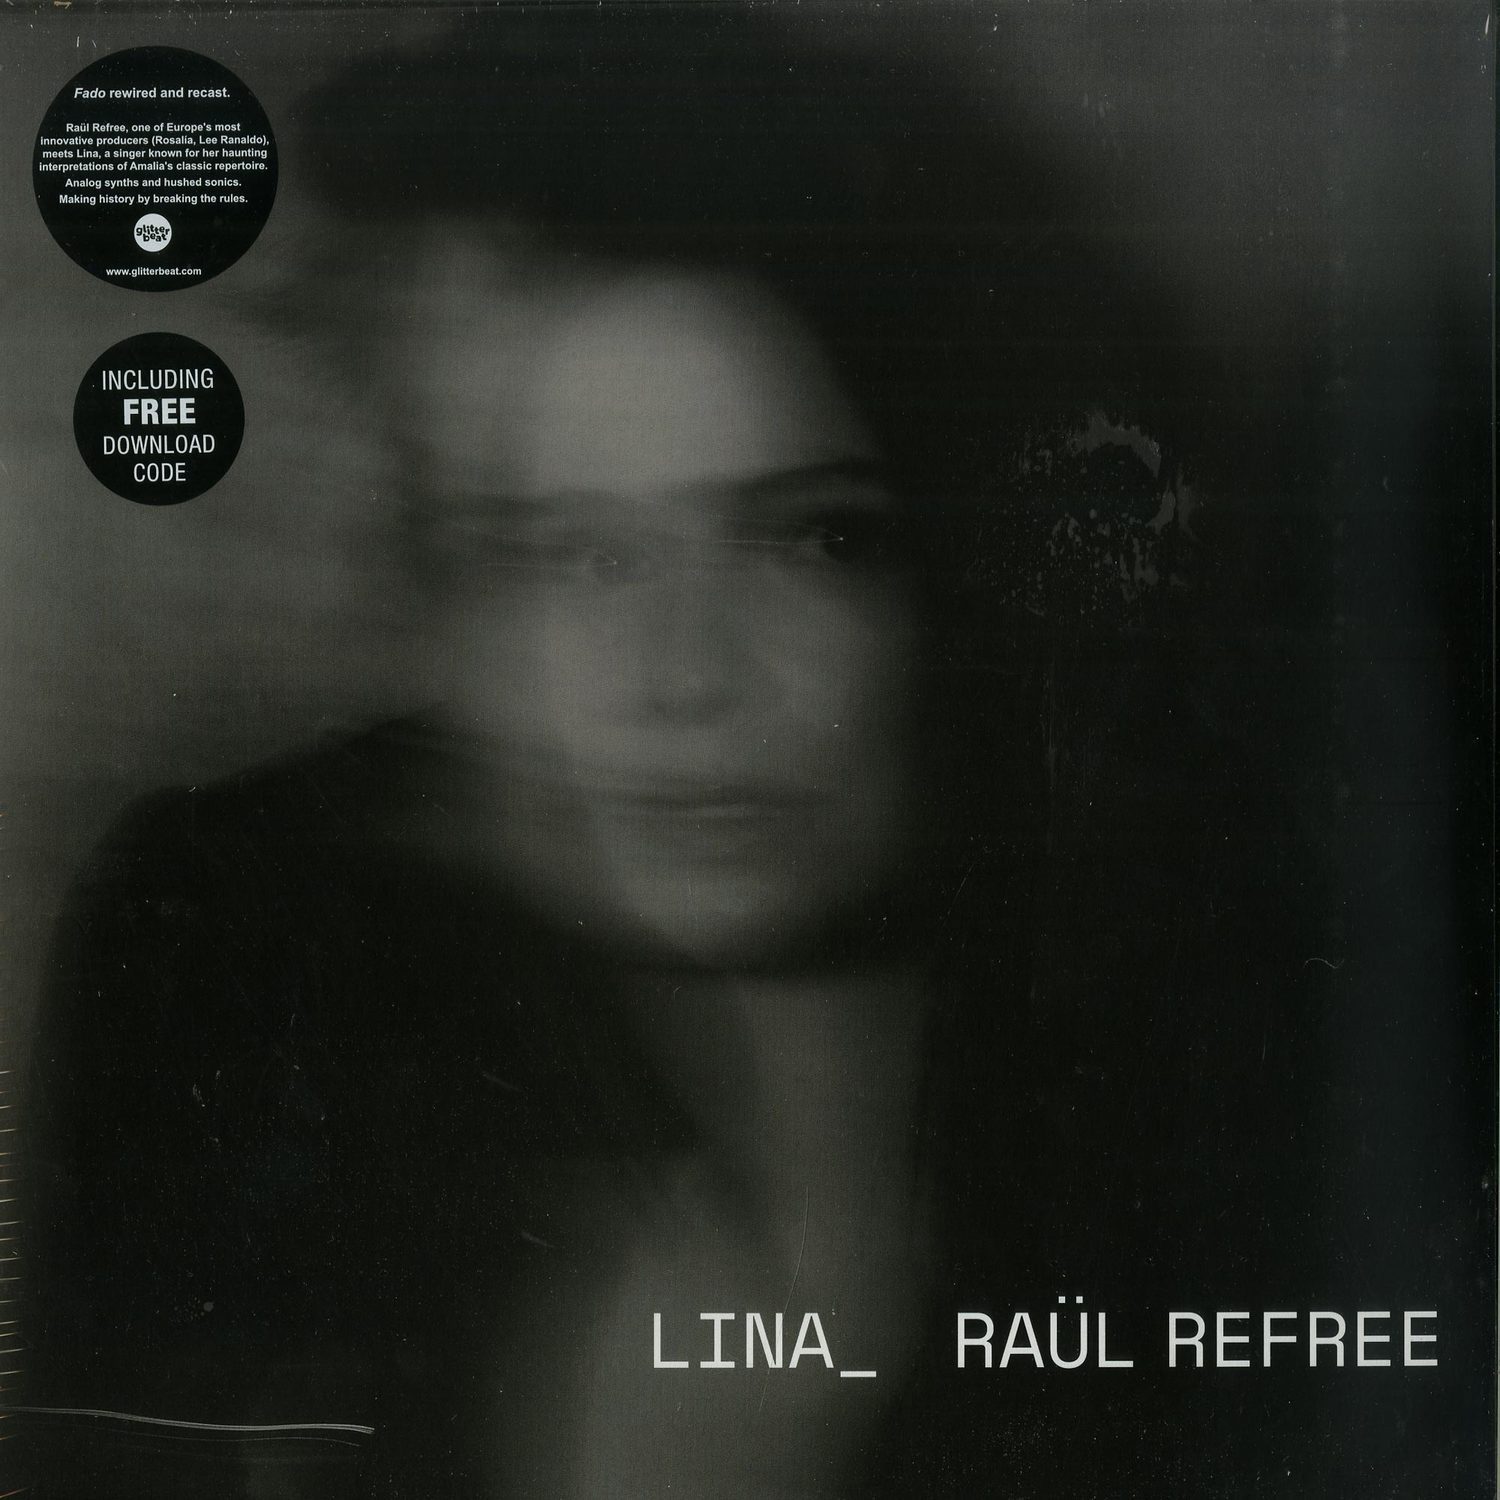 Lina & Raul Refree - LINA_RAUL REFREE 